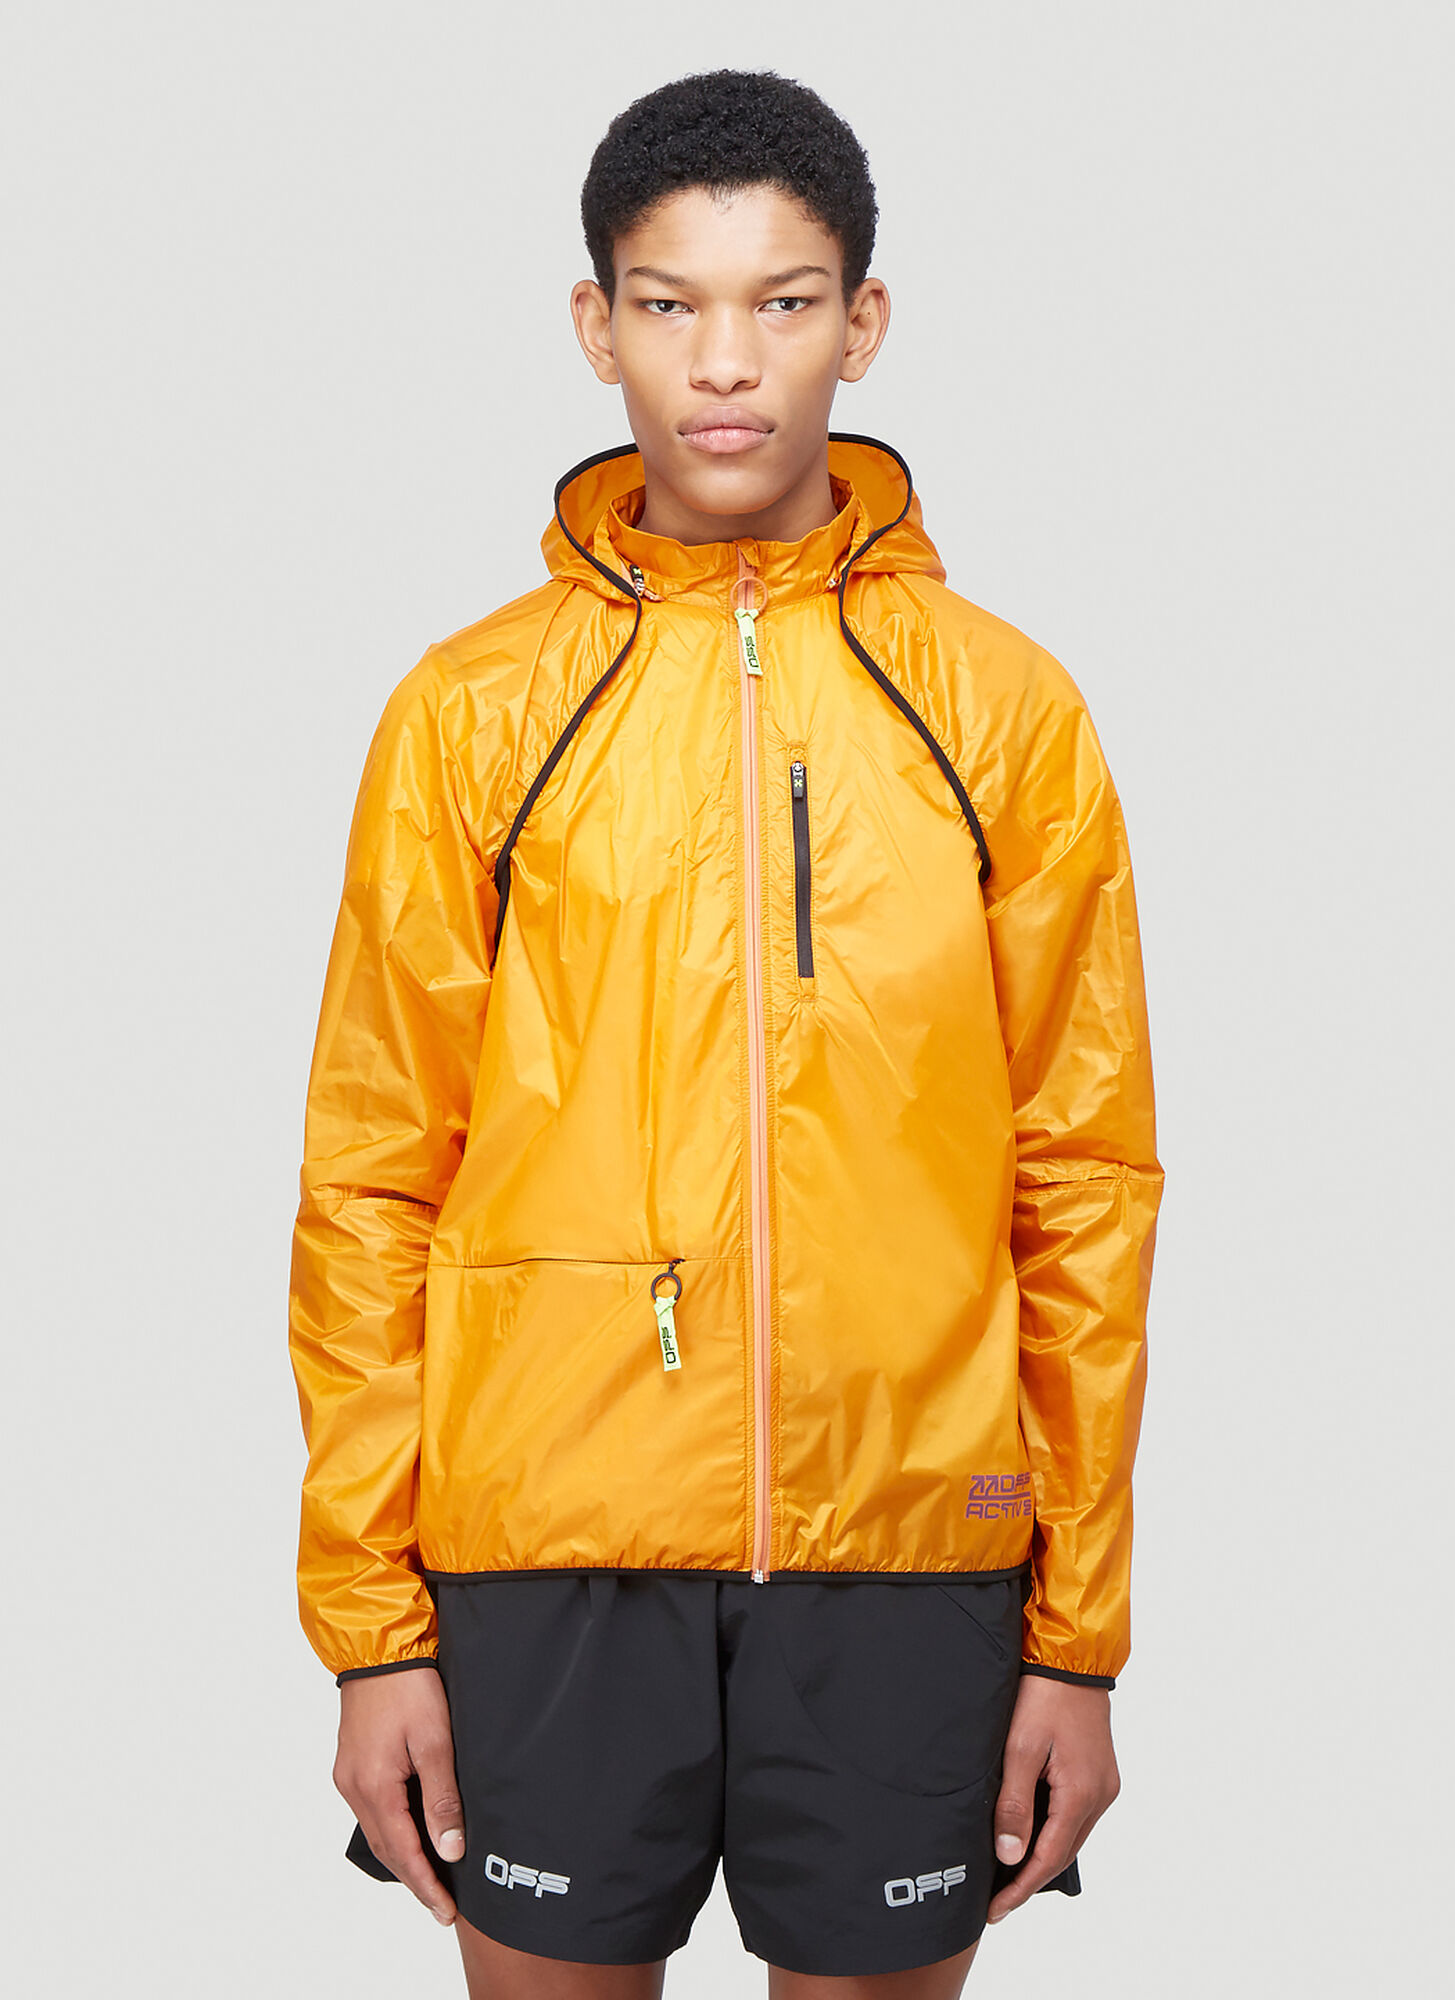 Off-White Running Multi Jacket in Orange size L | The Fashionisto